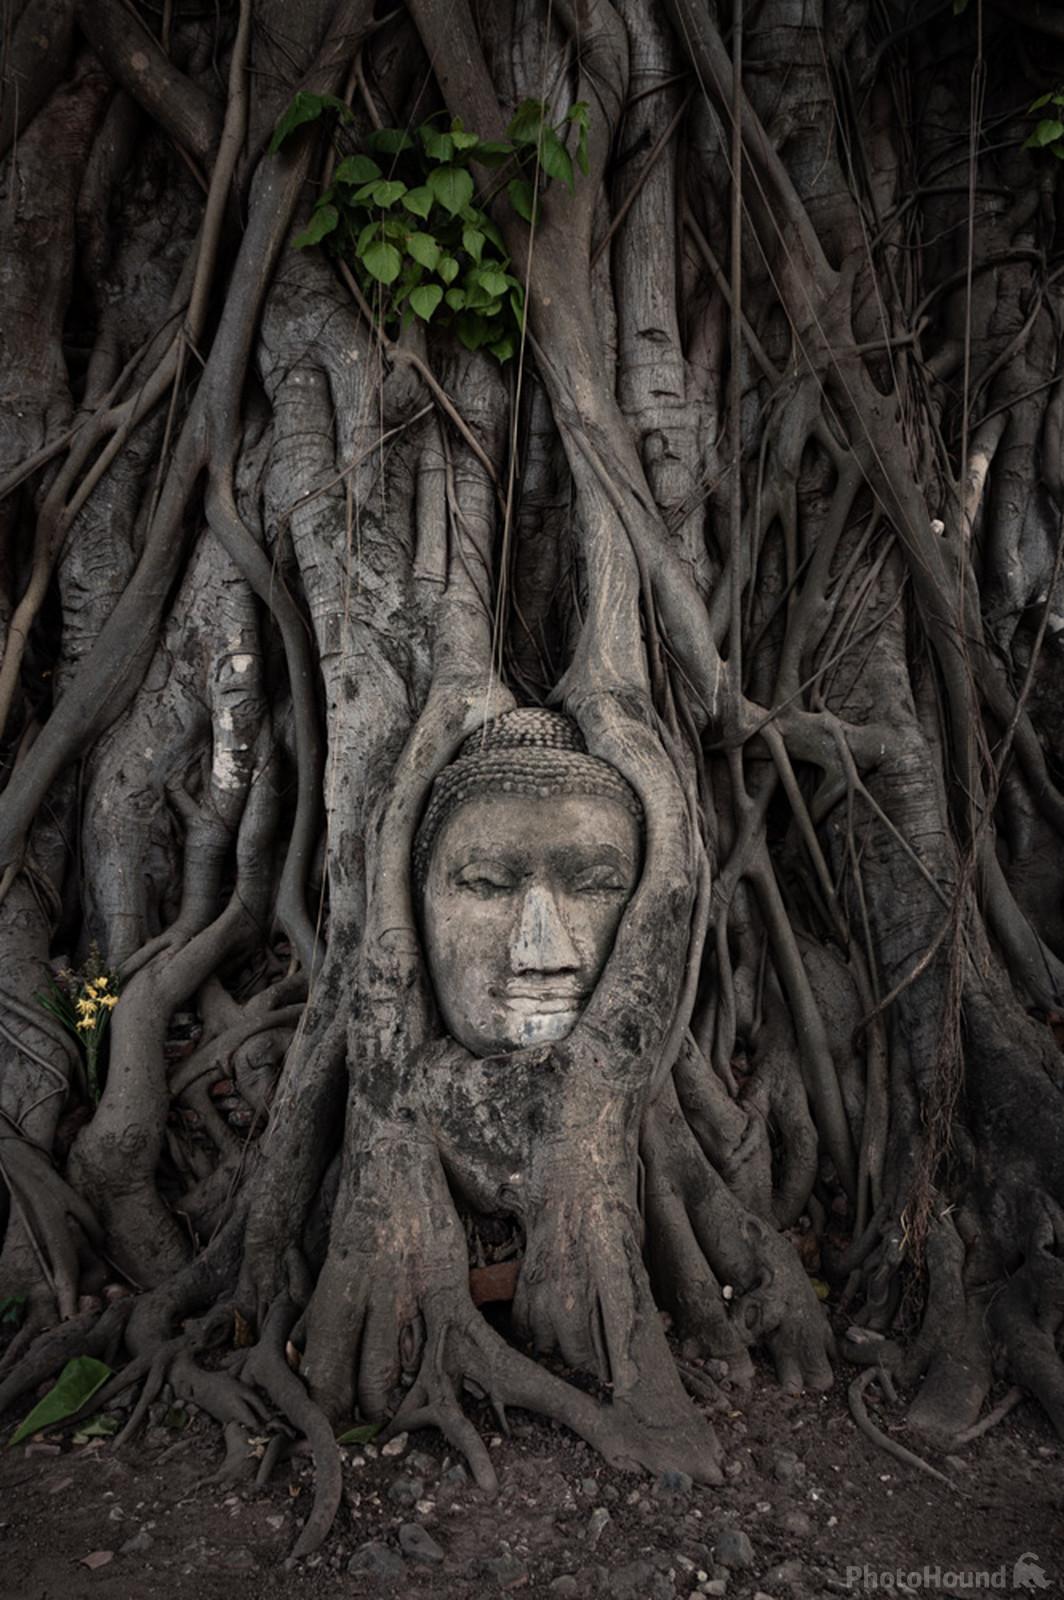 Image of Buddha Head in a tree by Luka Esenko